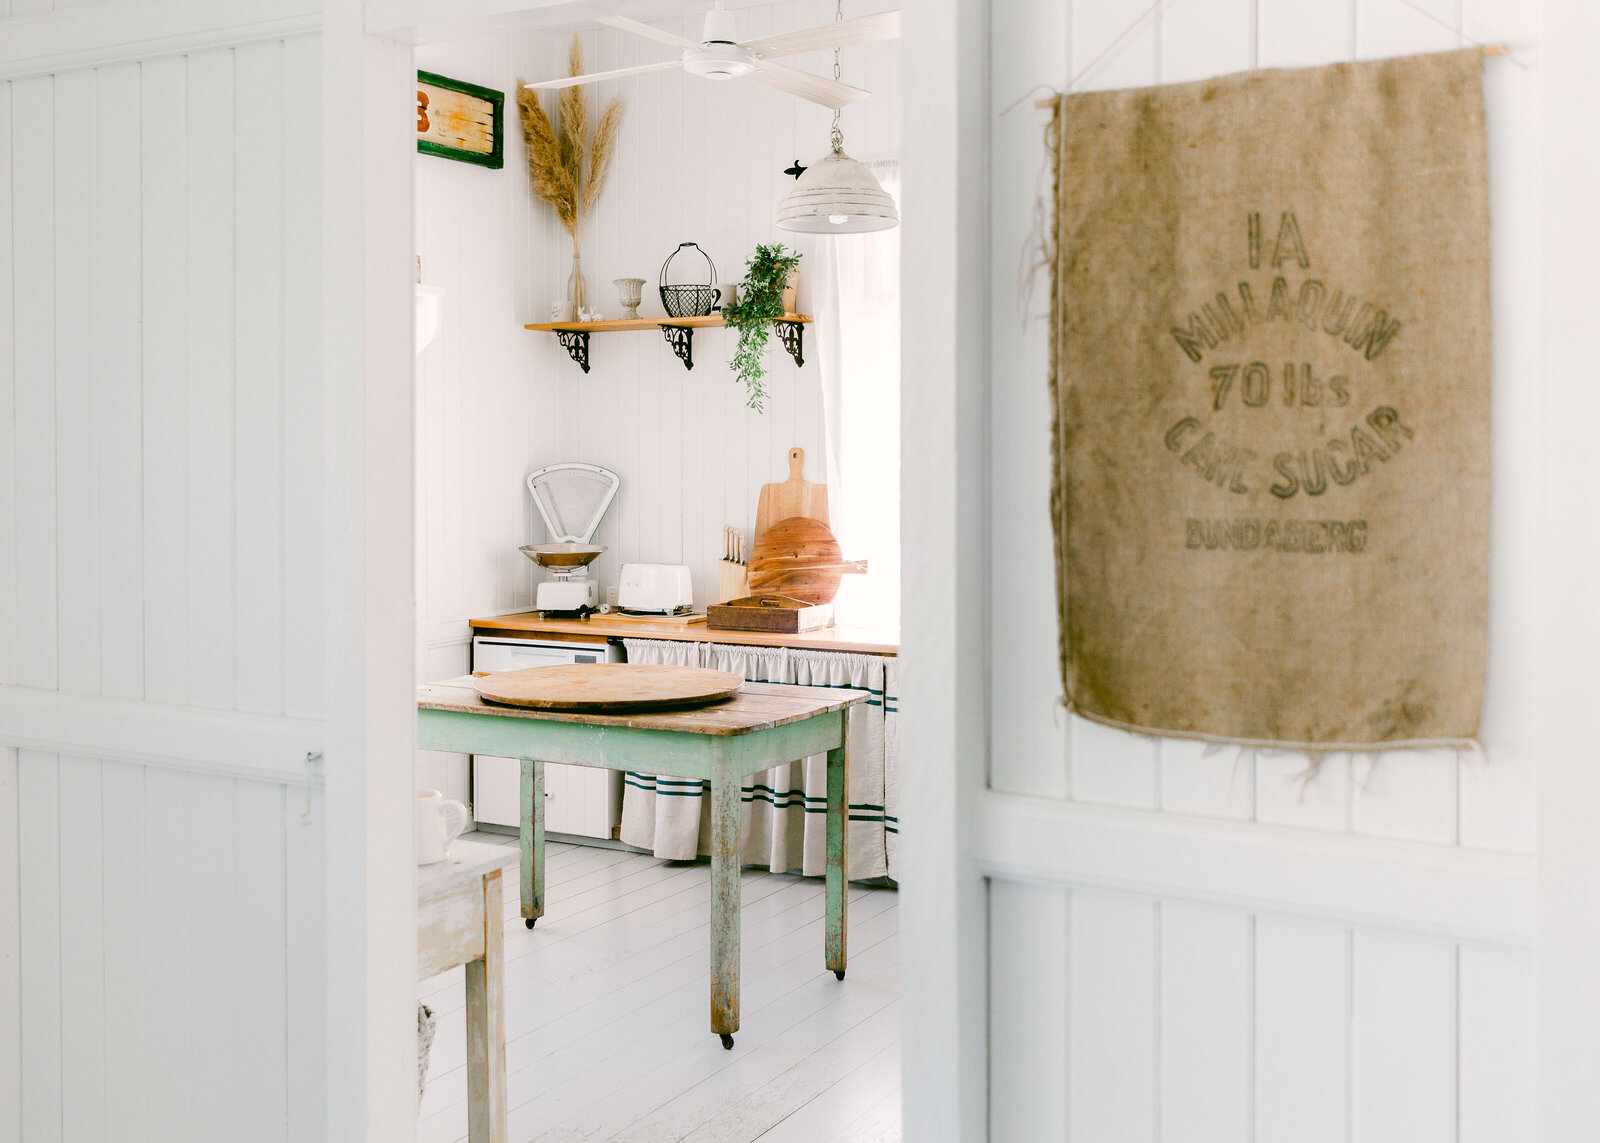 White rustic vintage airbnb in Bundaberg Queensland captured by Chelsea Loren